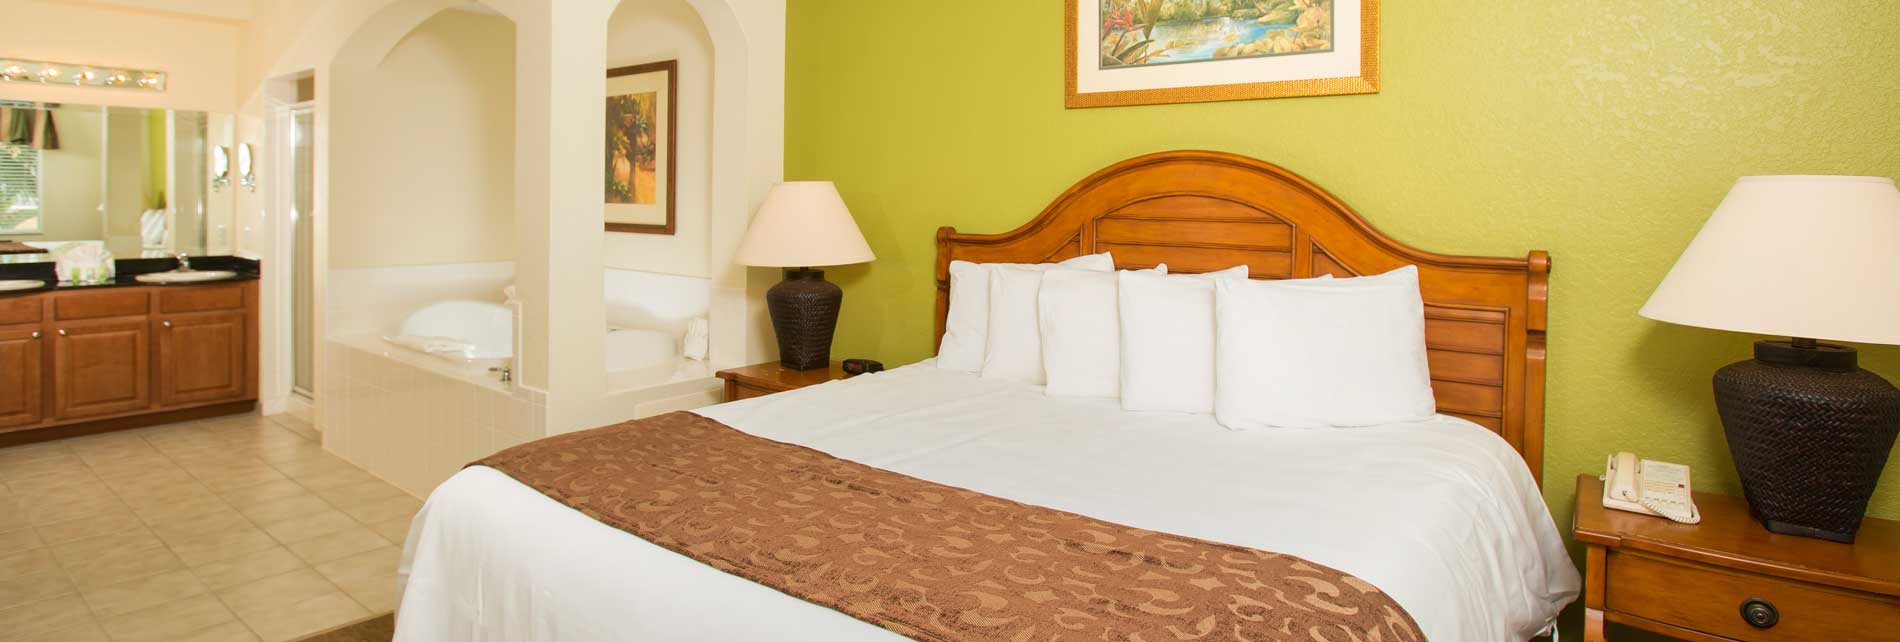 Lake Buena Vista Resort - Bedroom - Banner